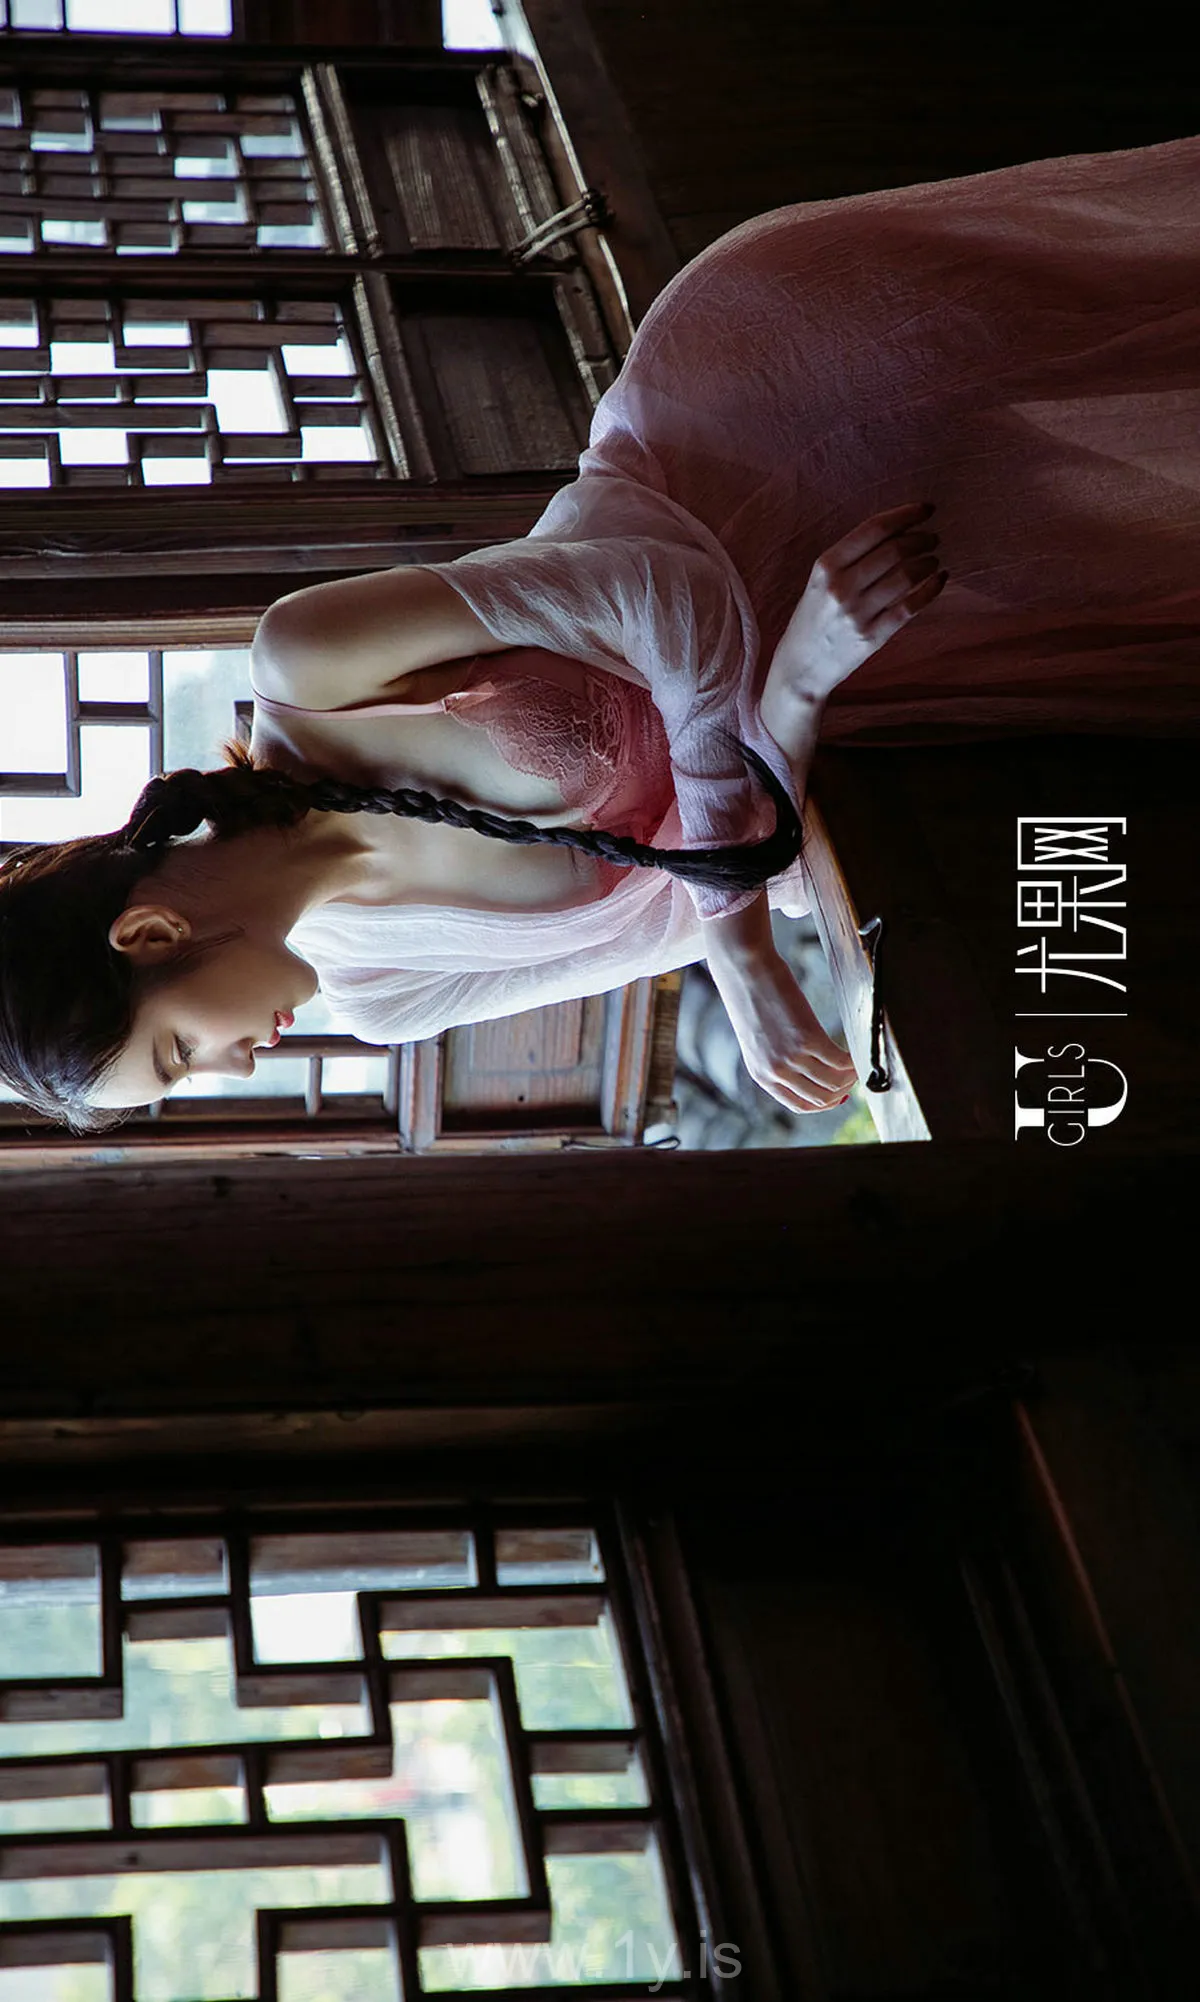 UGIRLS NO.1250 Breathtaking Chinese Girl 萌琪琪